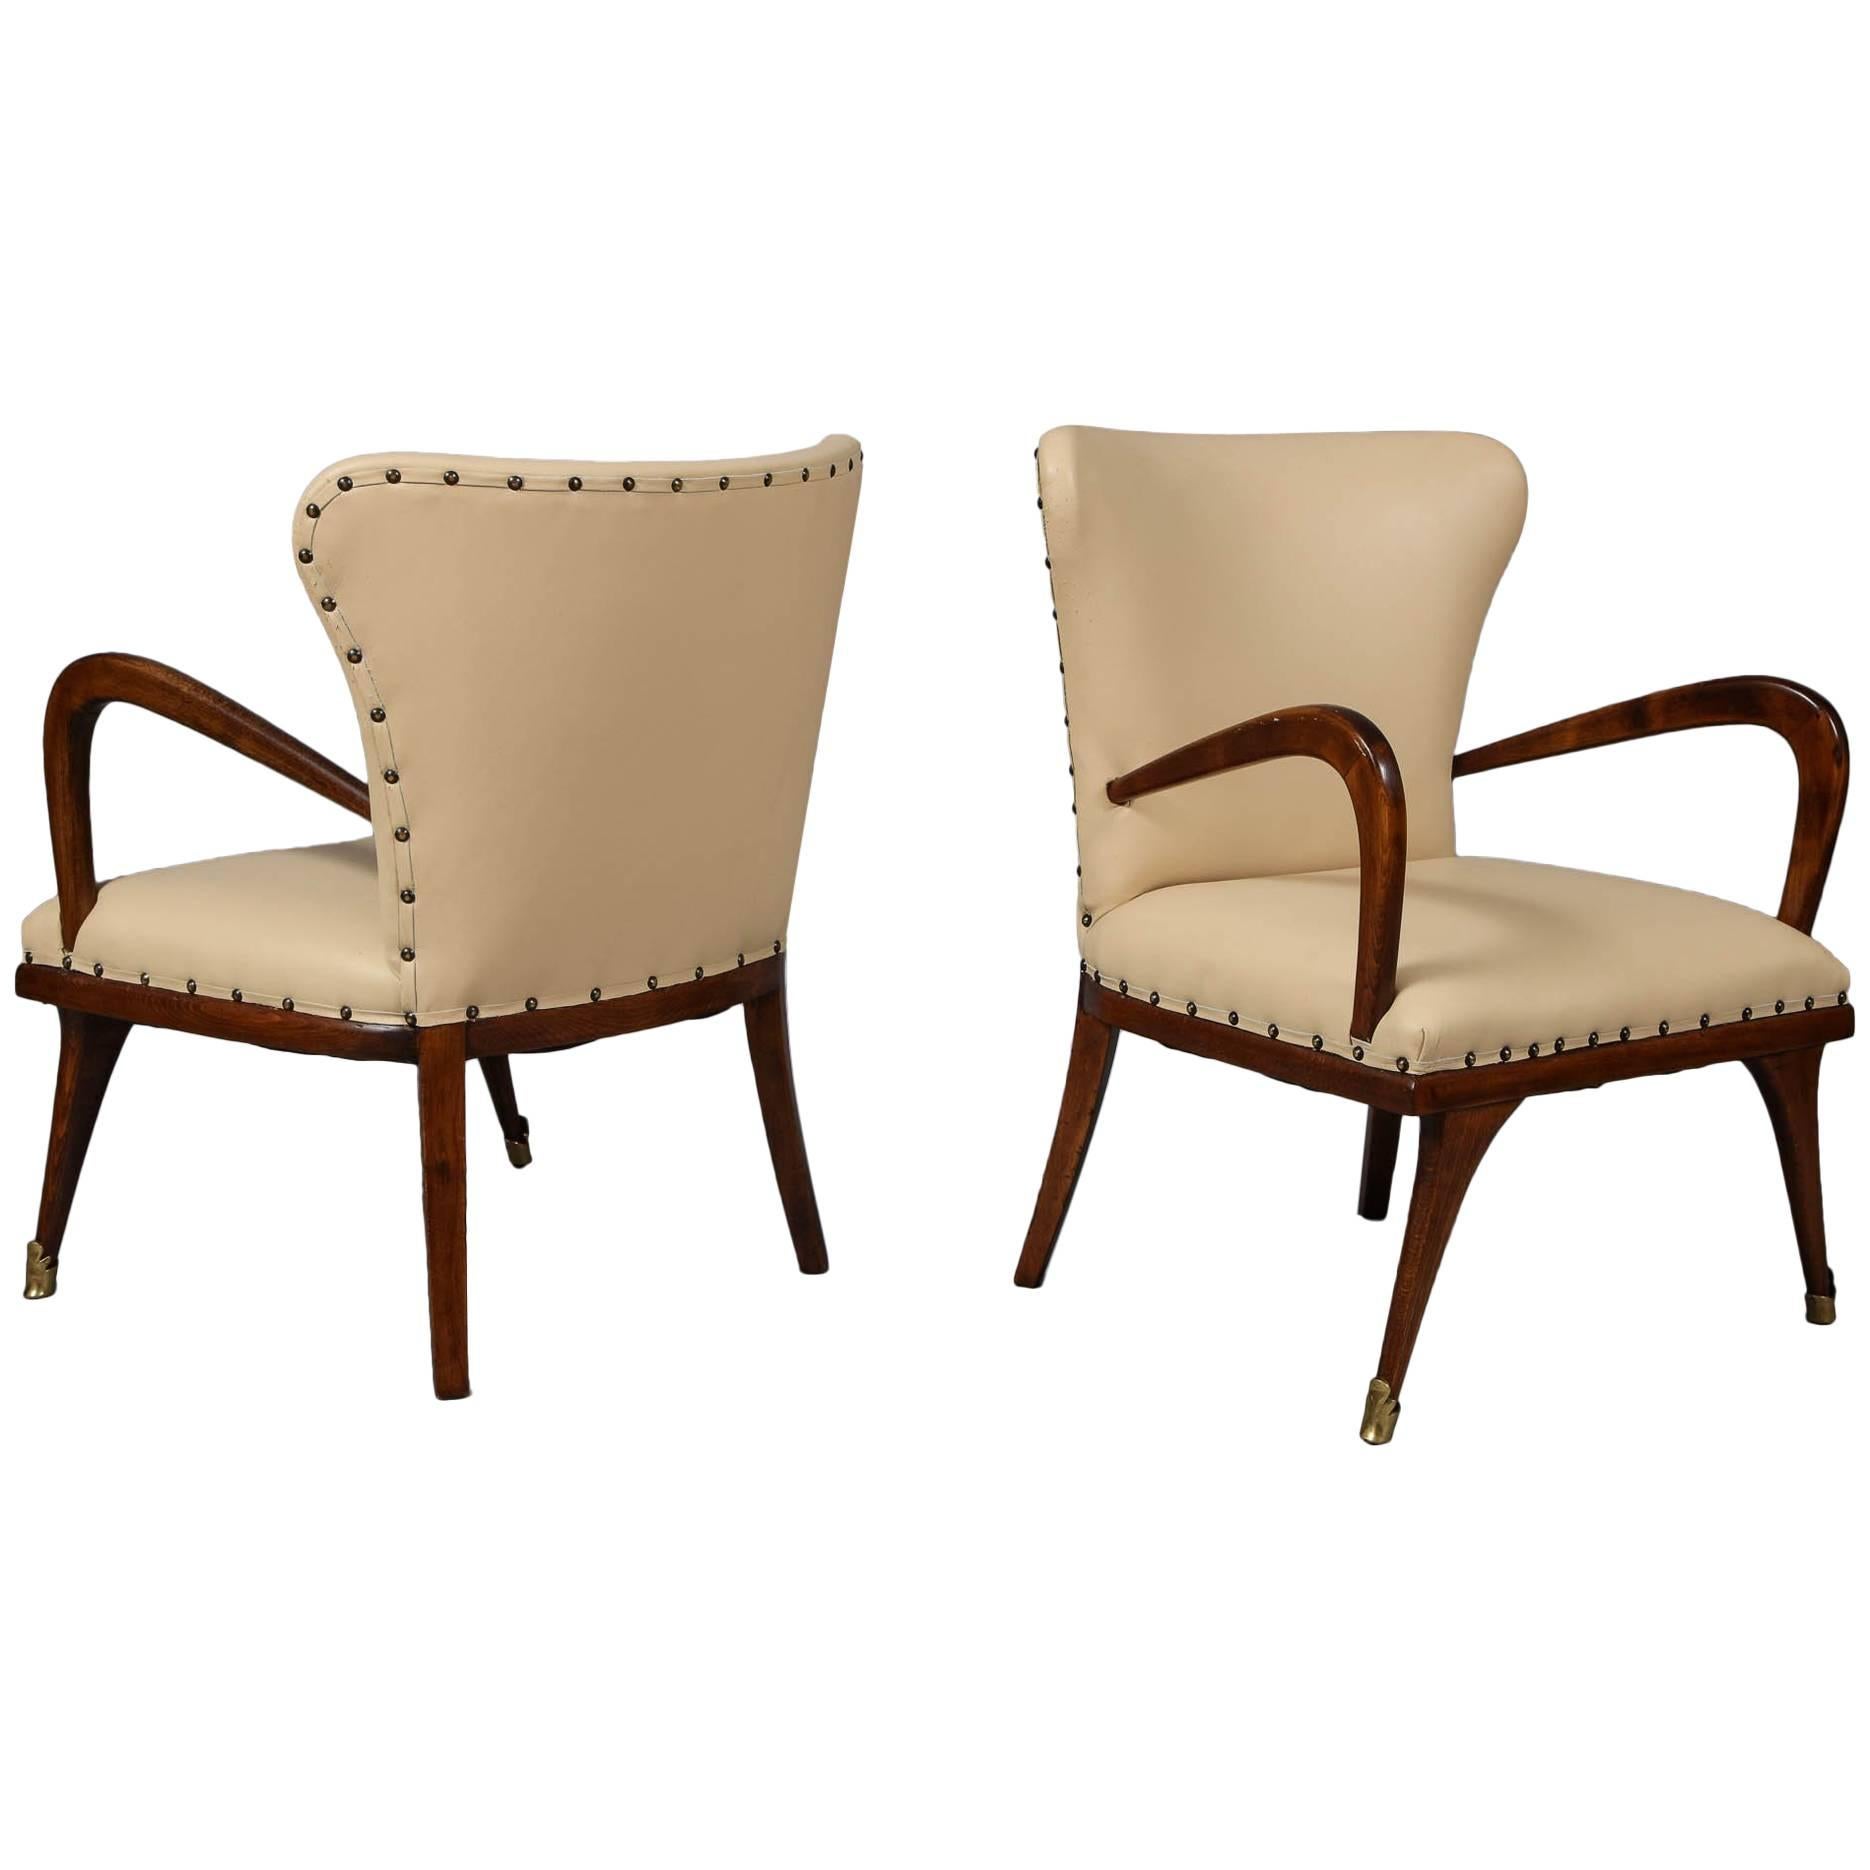 Pair of Diminutive Modernist Armchairs